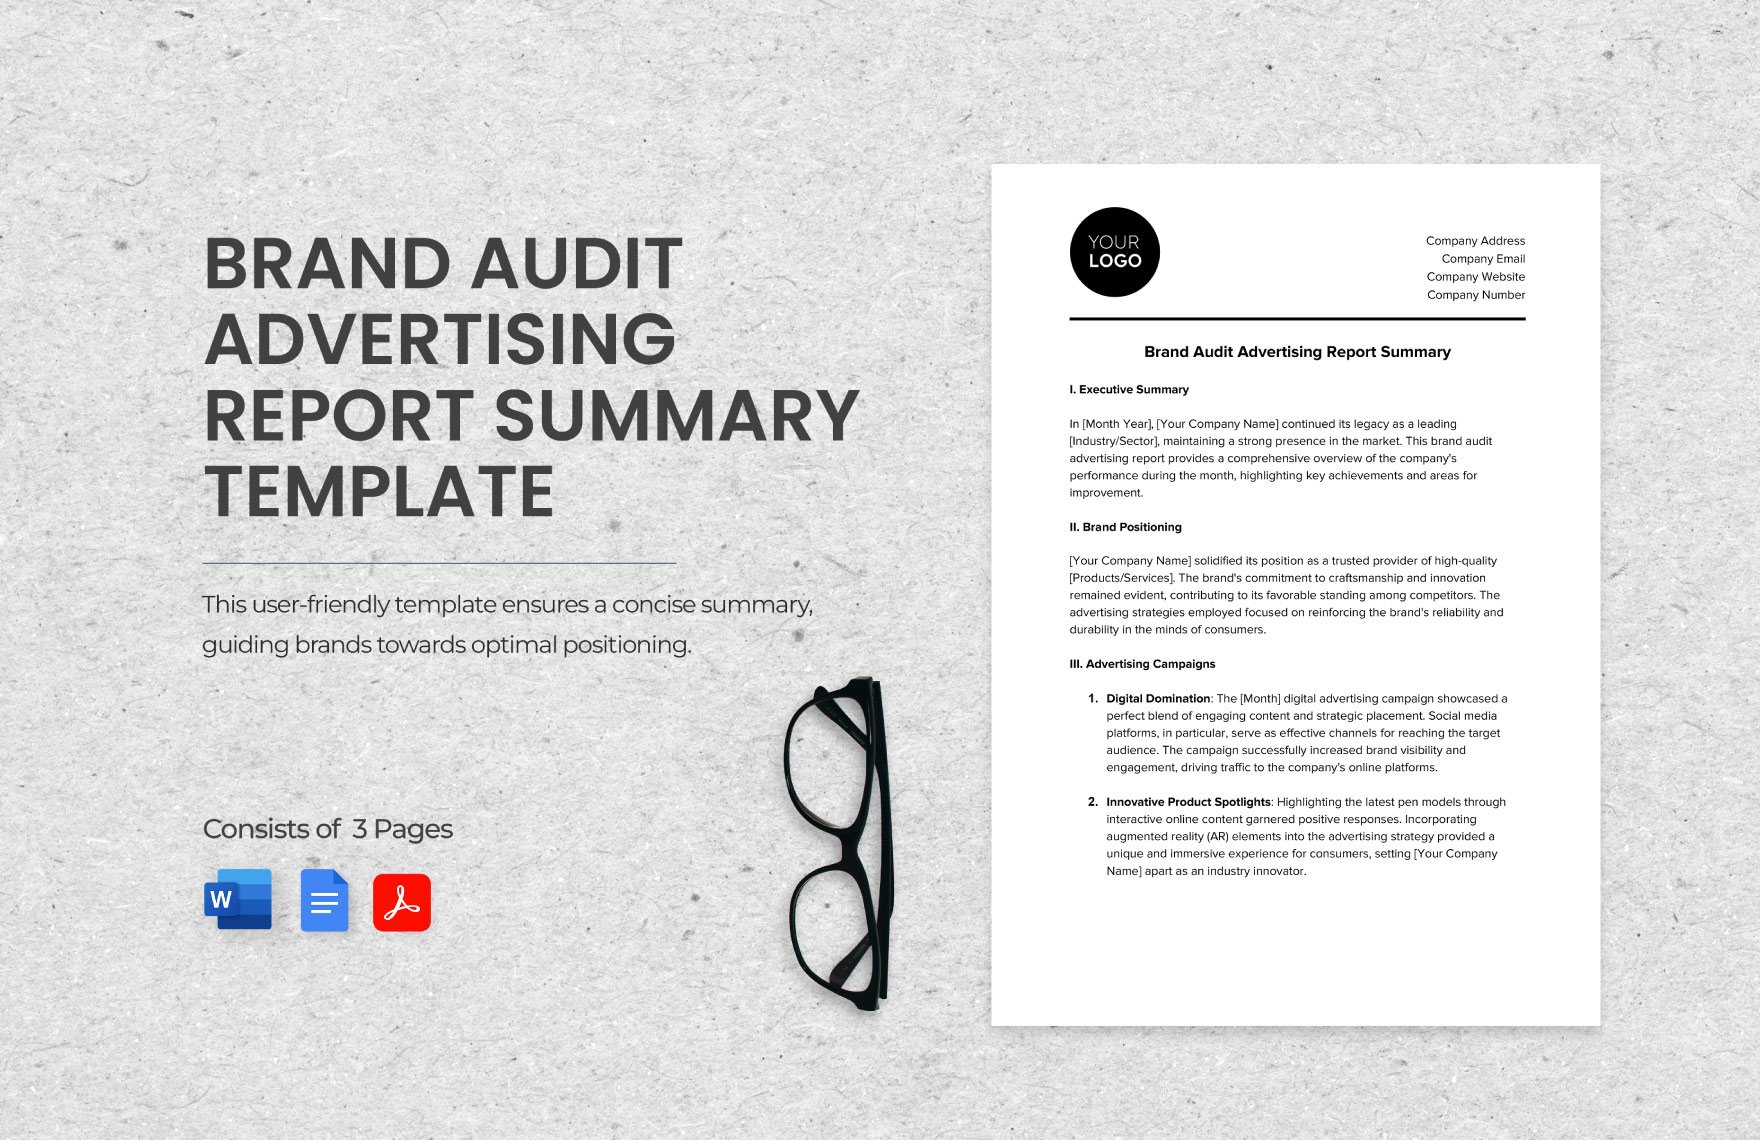 Brand Audit Advertising Report Summary Template